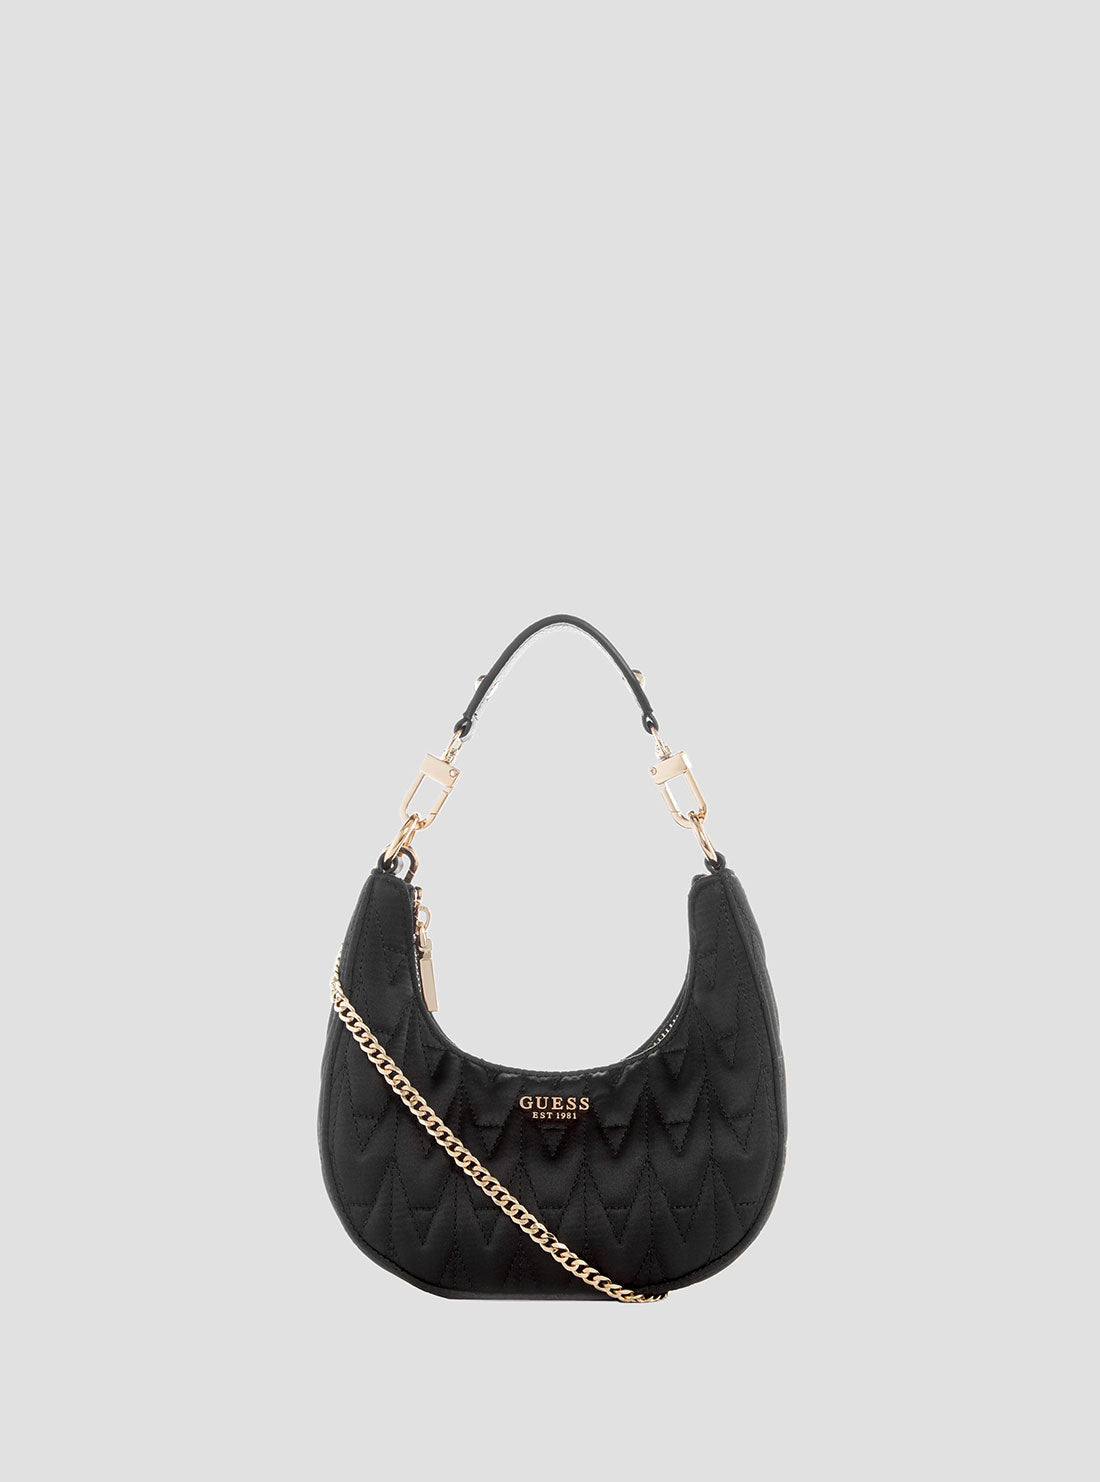 GUESS Women's Black Golden Rock Mini Hobo Bag EG874972 Front View